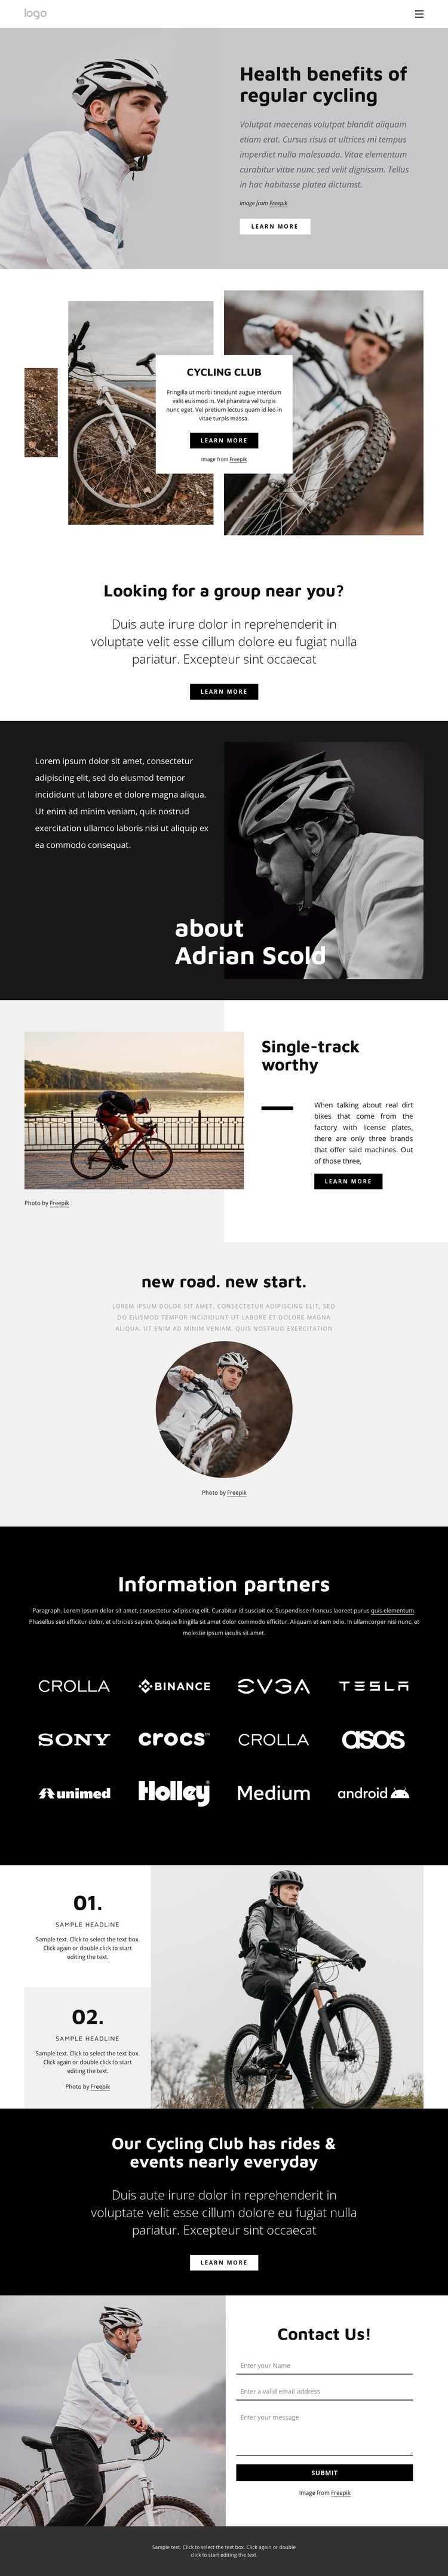 Benefits of regular cycling Webflow Template Alternative